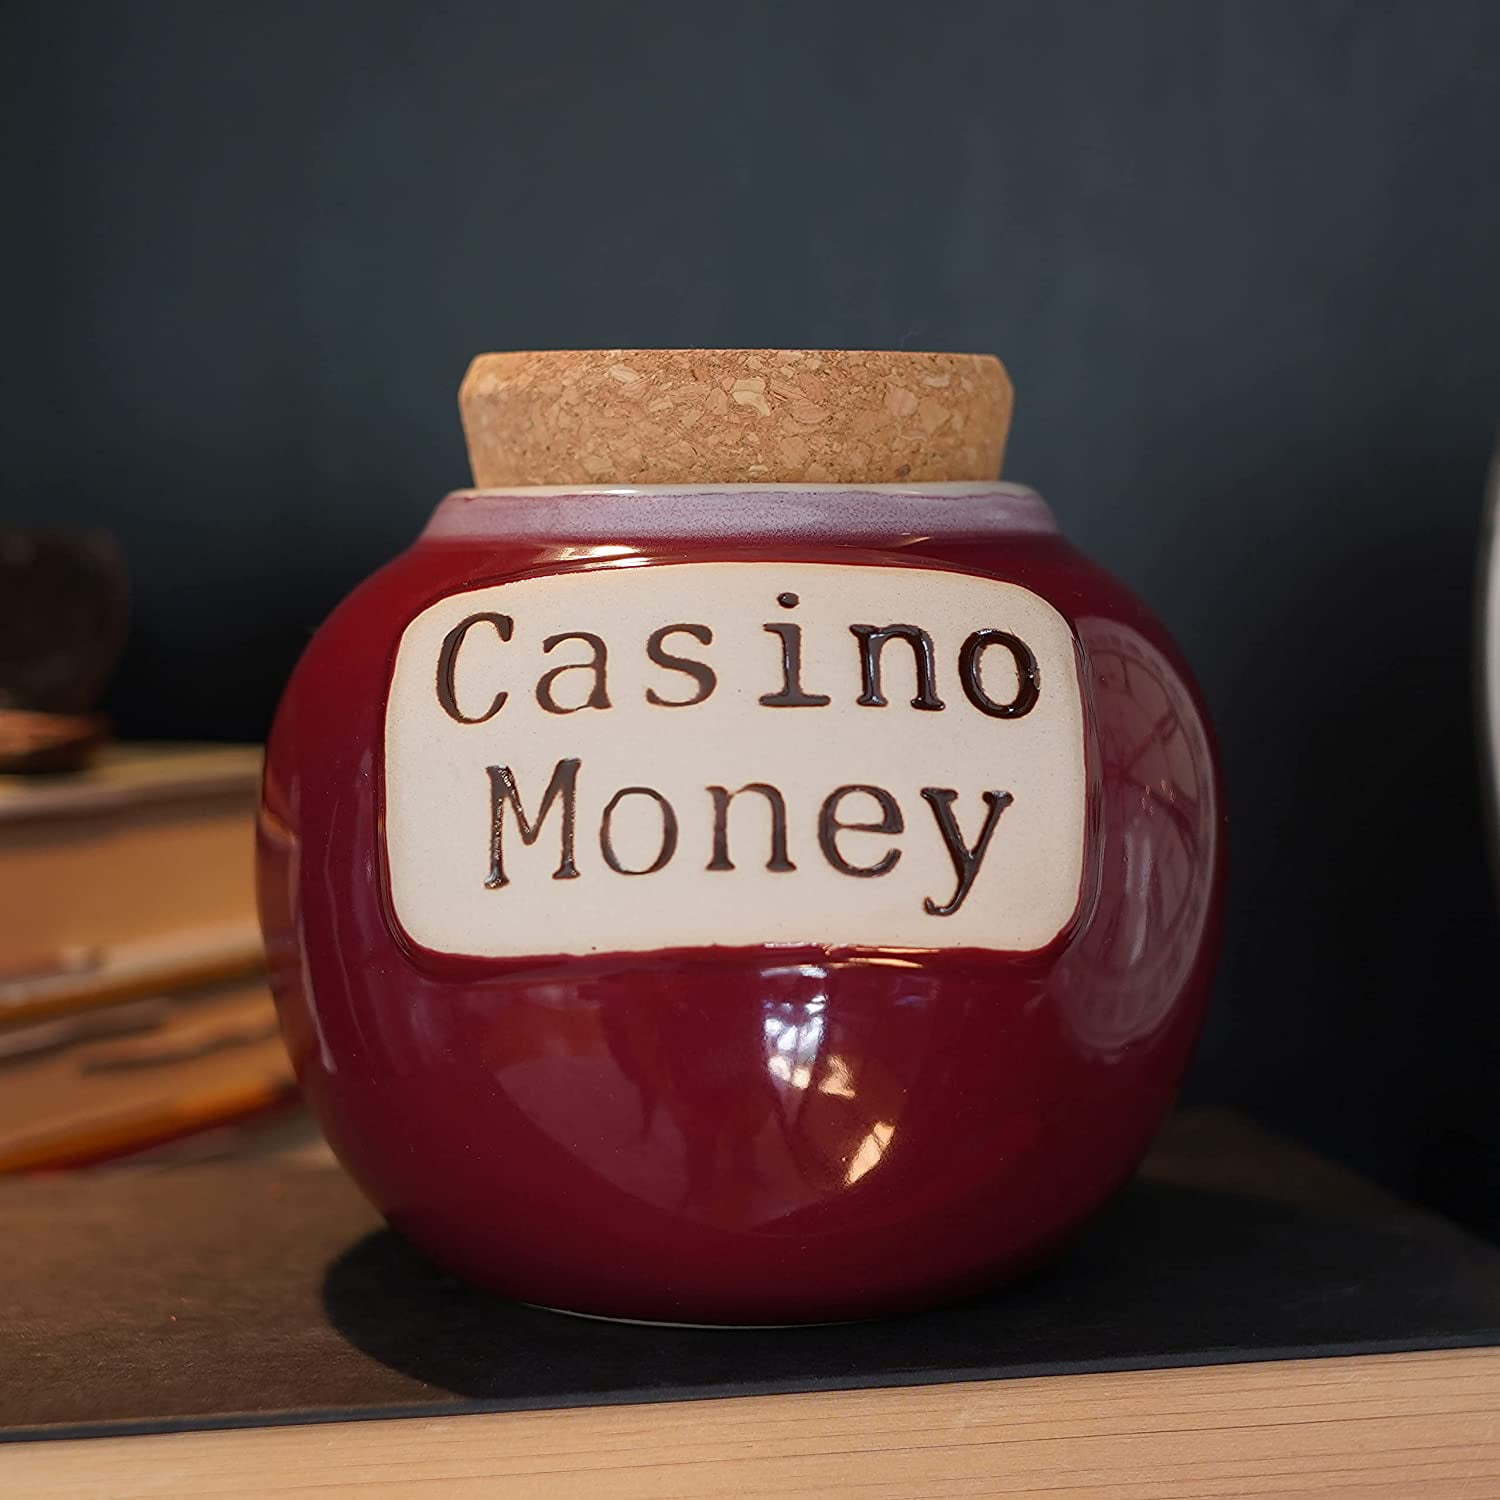 Cottage Creek Casino Money Piggy Bank, Slots Gifts, Gambling Gifts